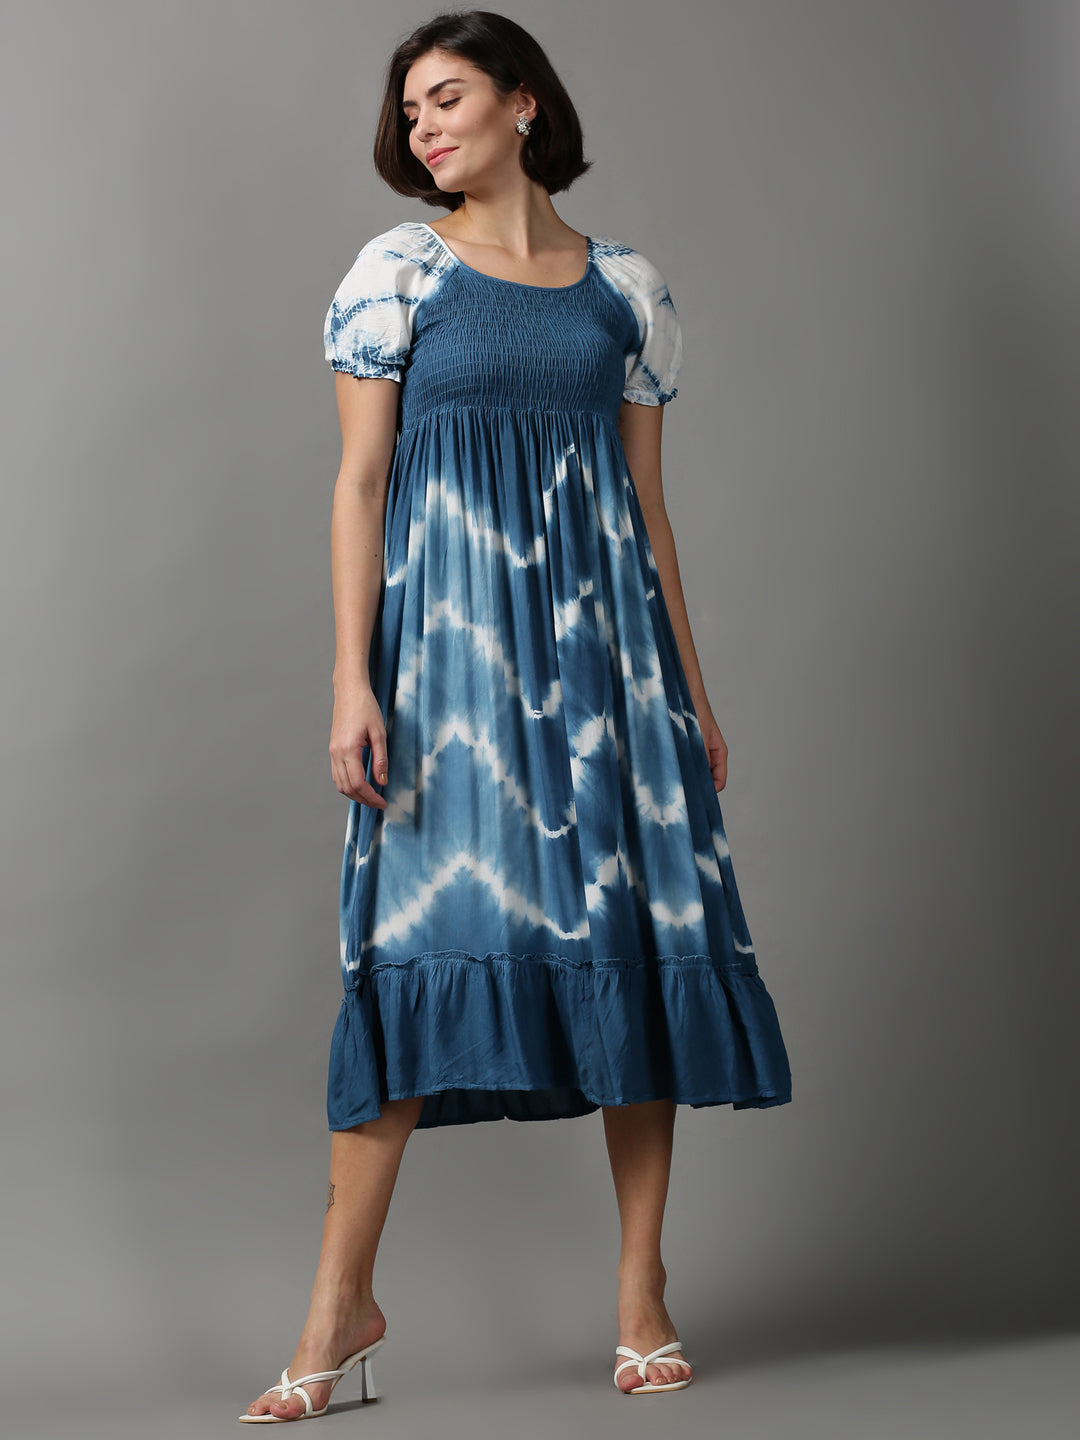 Women's Blue Tie Dye Fit and Flare Dress